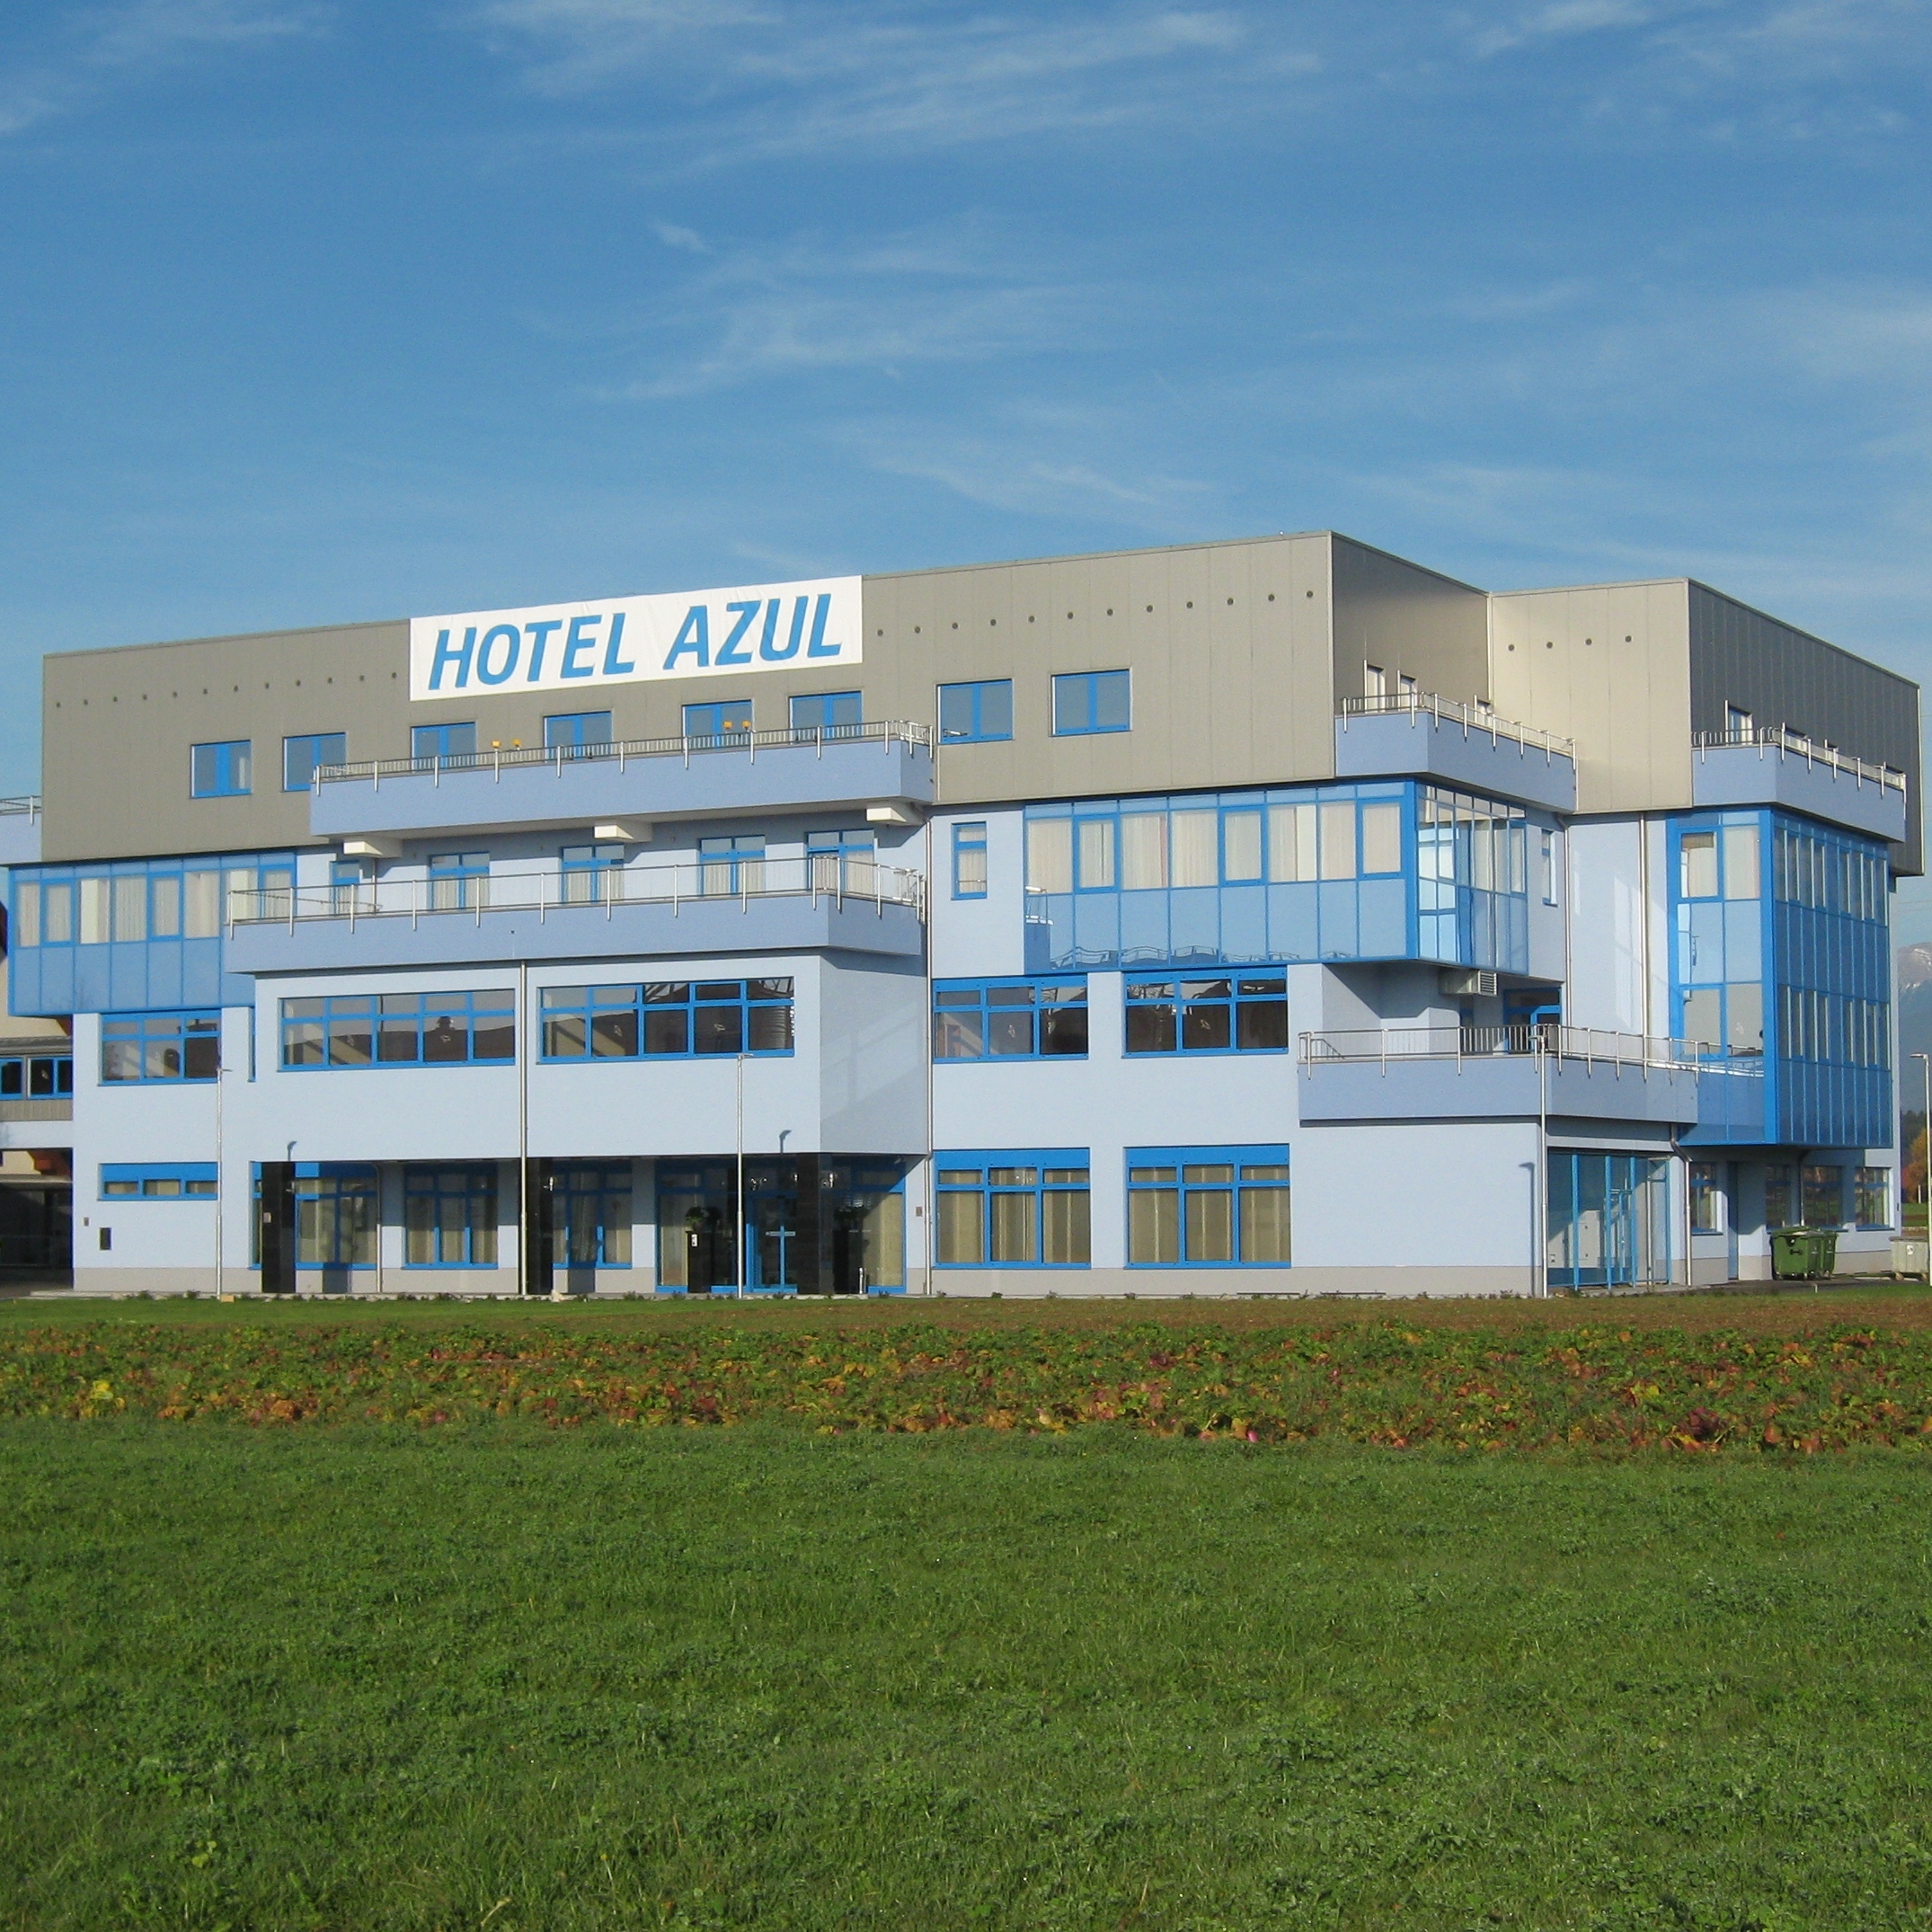 Hotel Azul image